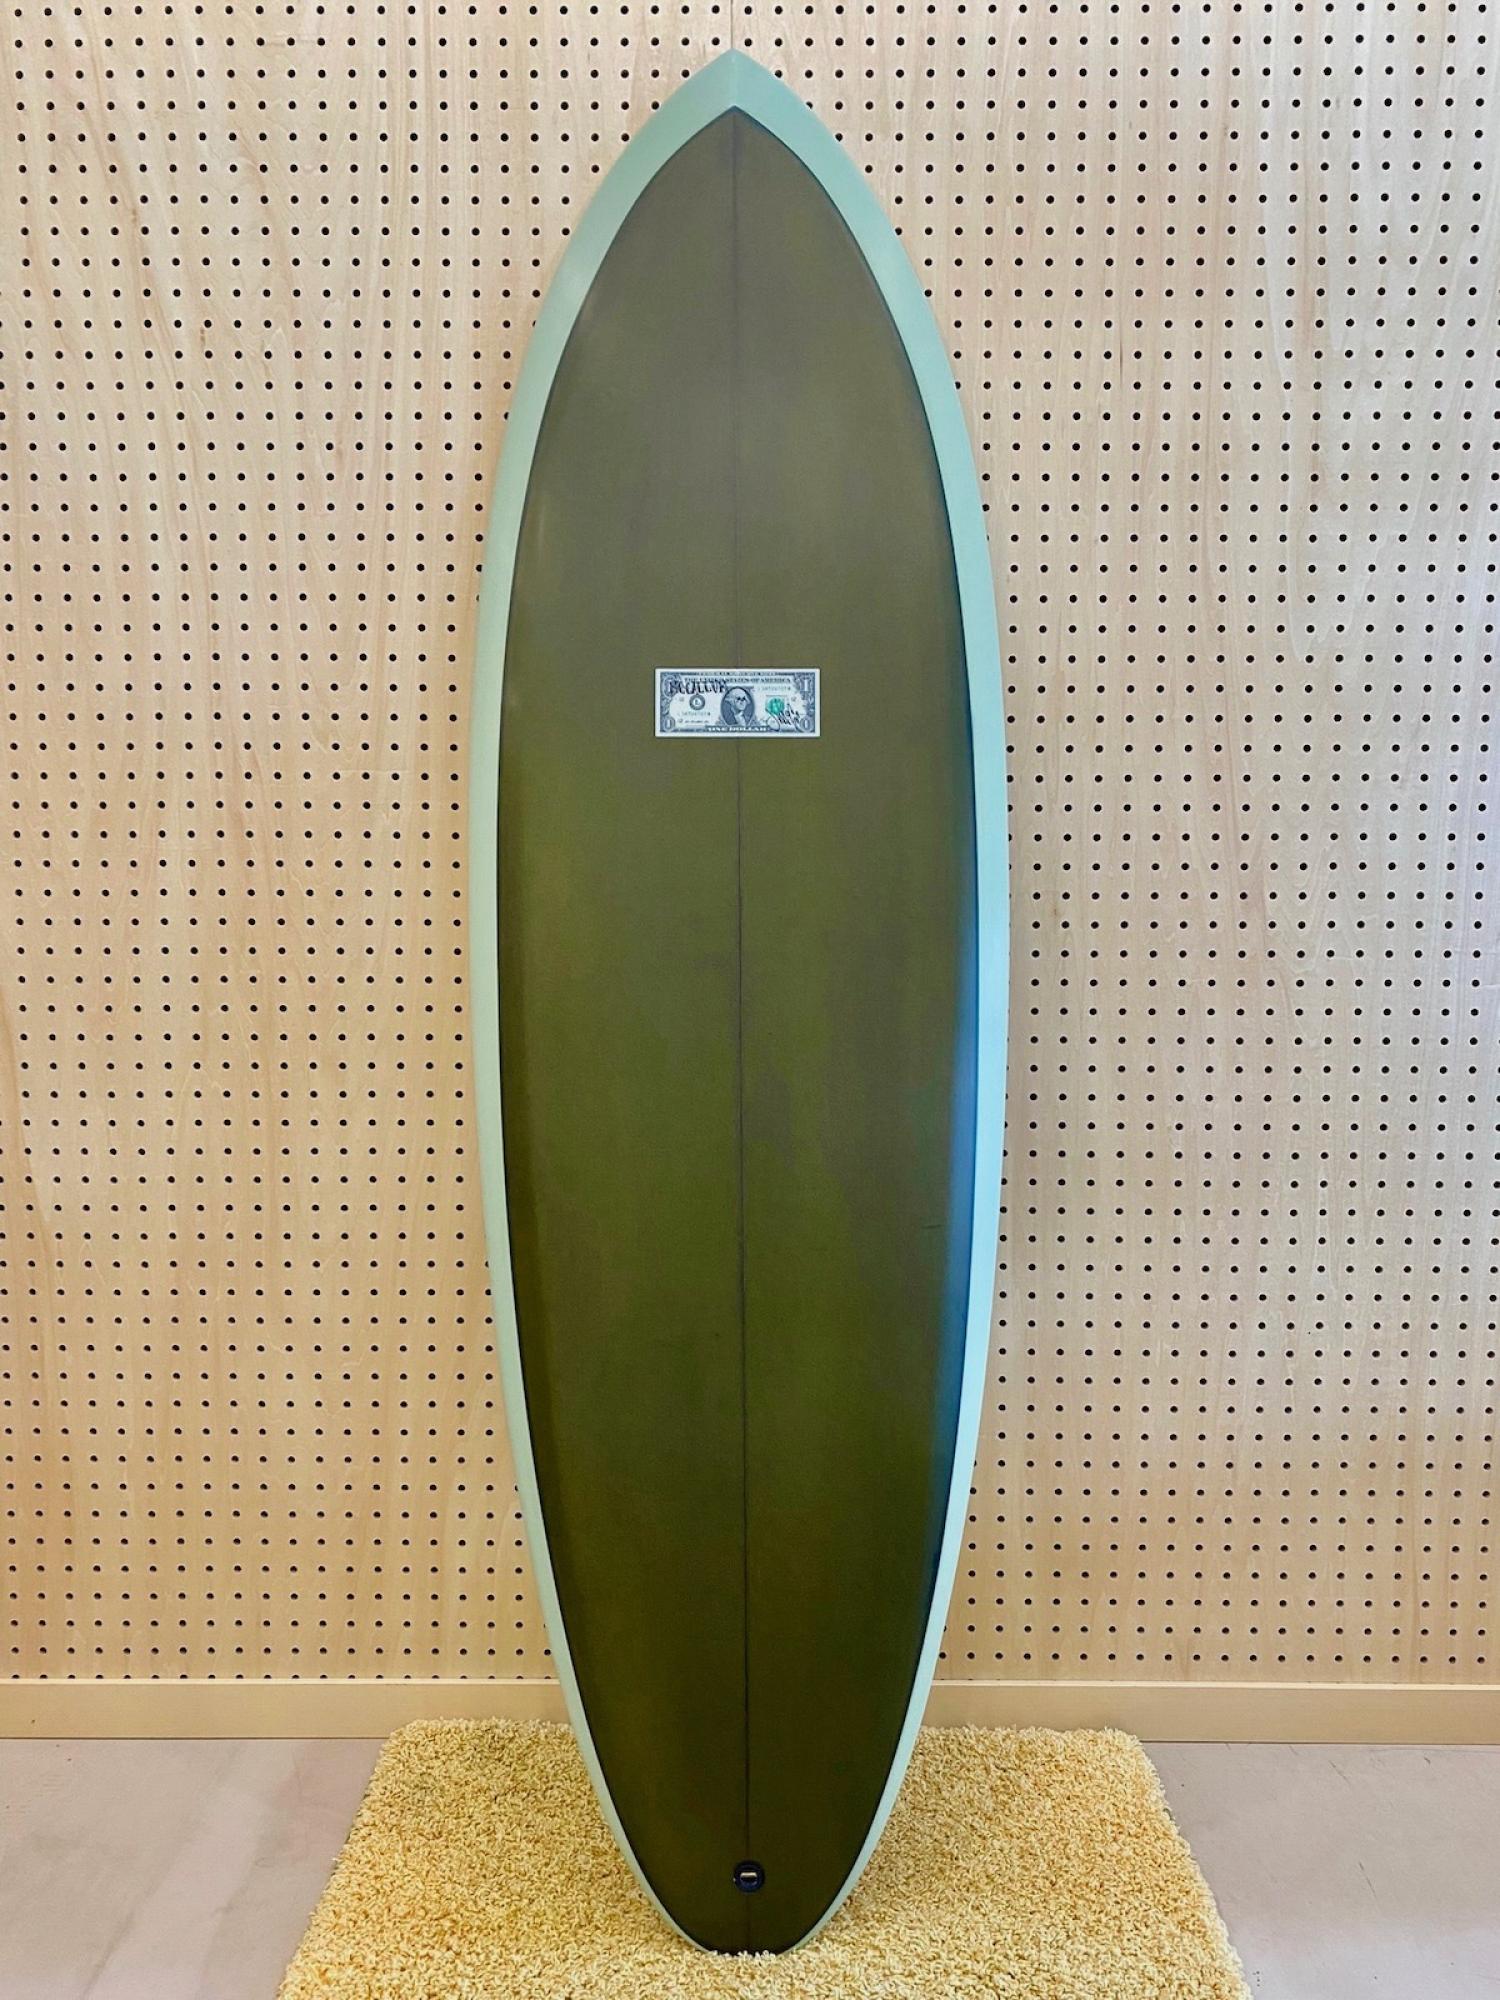 Mccallum Surfboards|Okinawa surf shop YES SURF